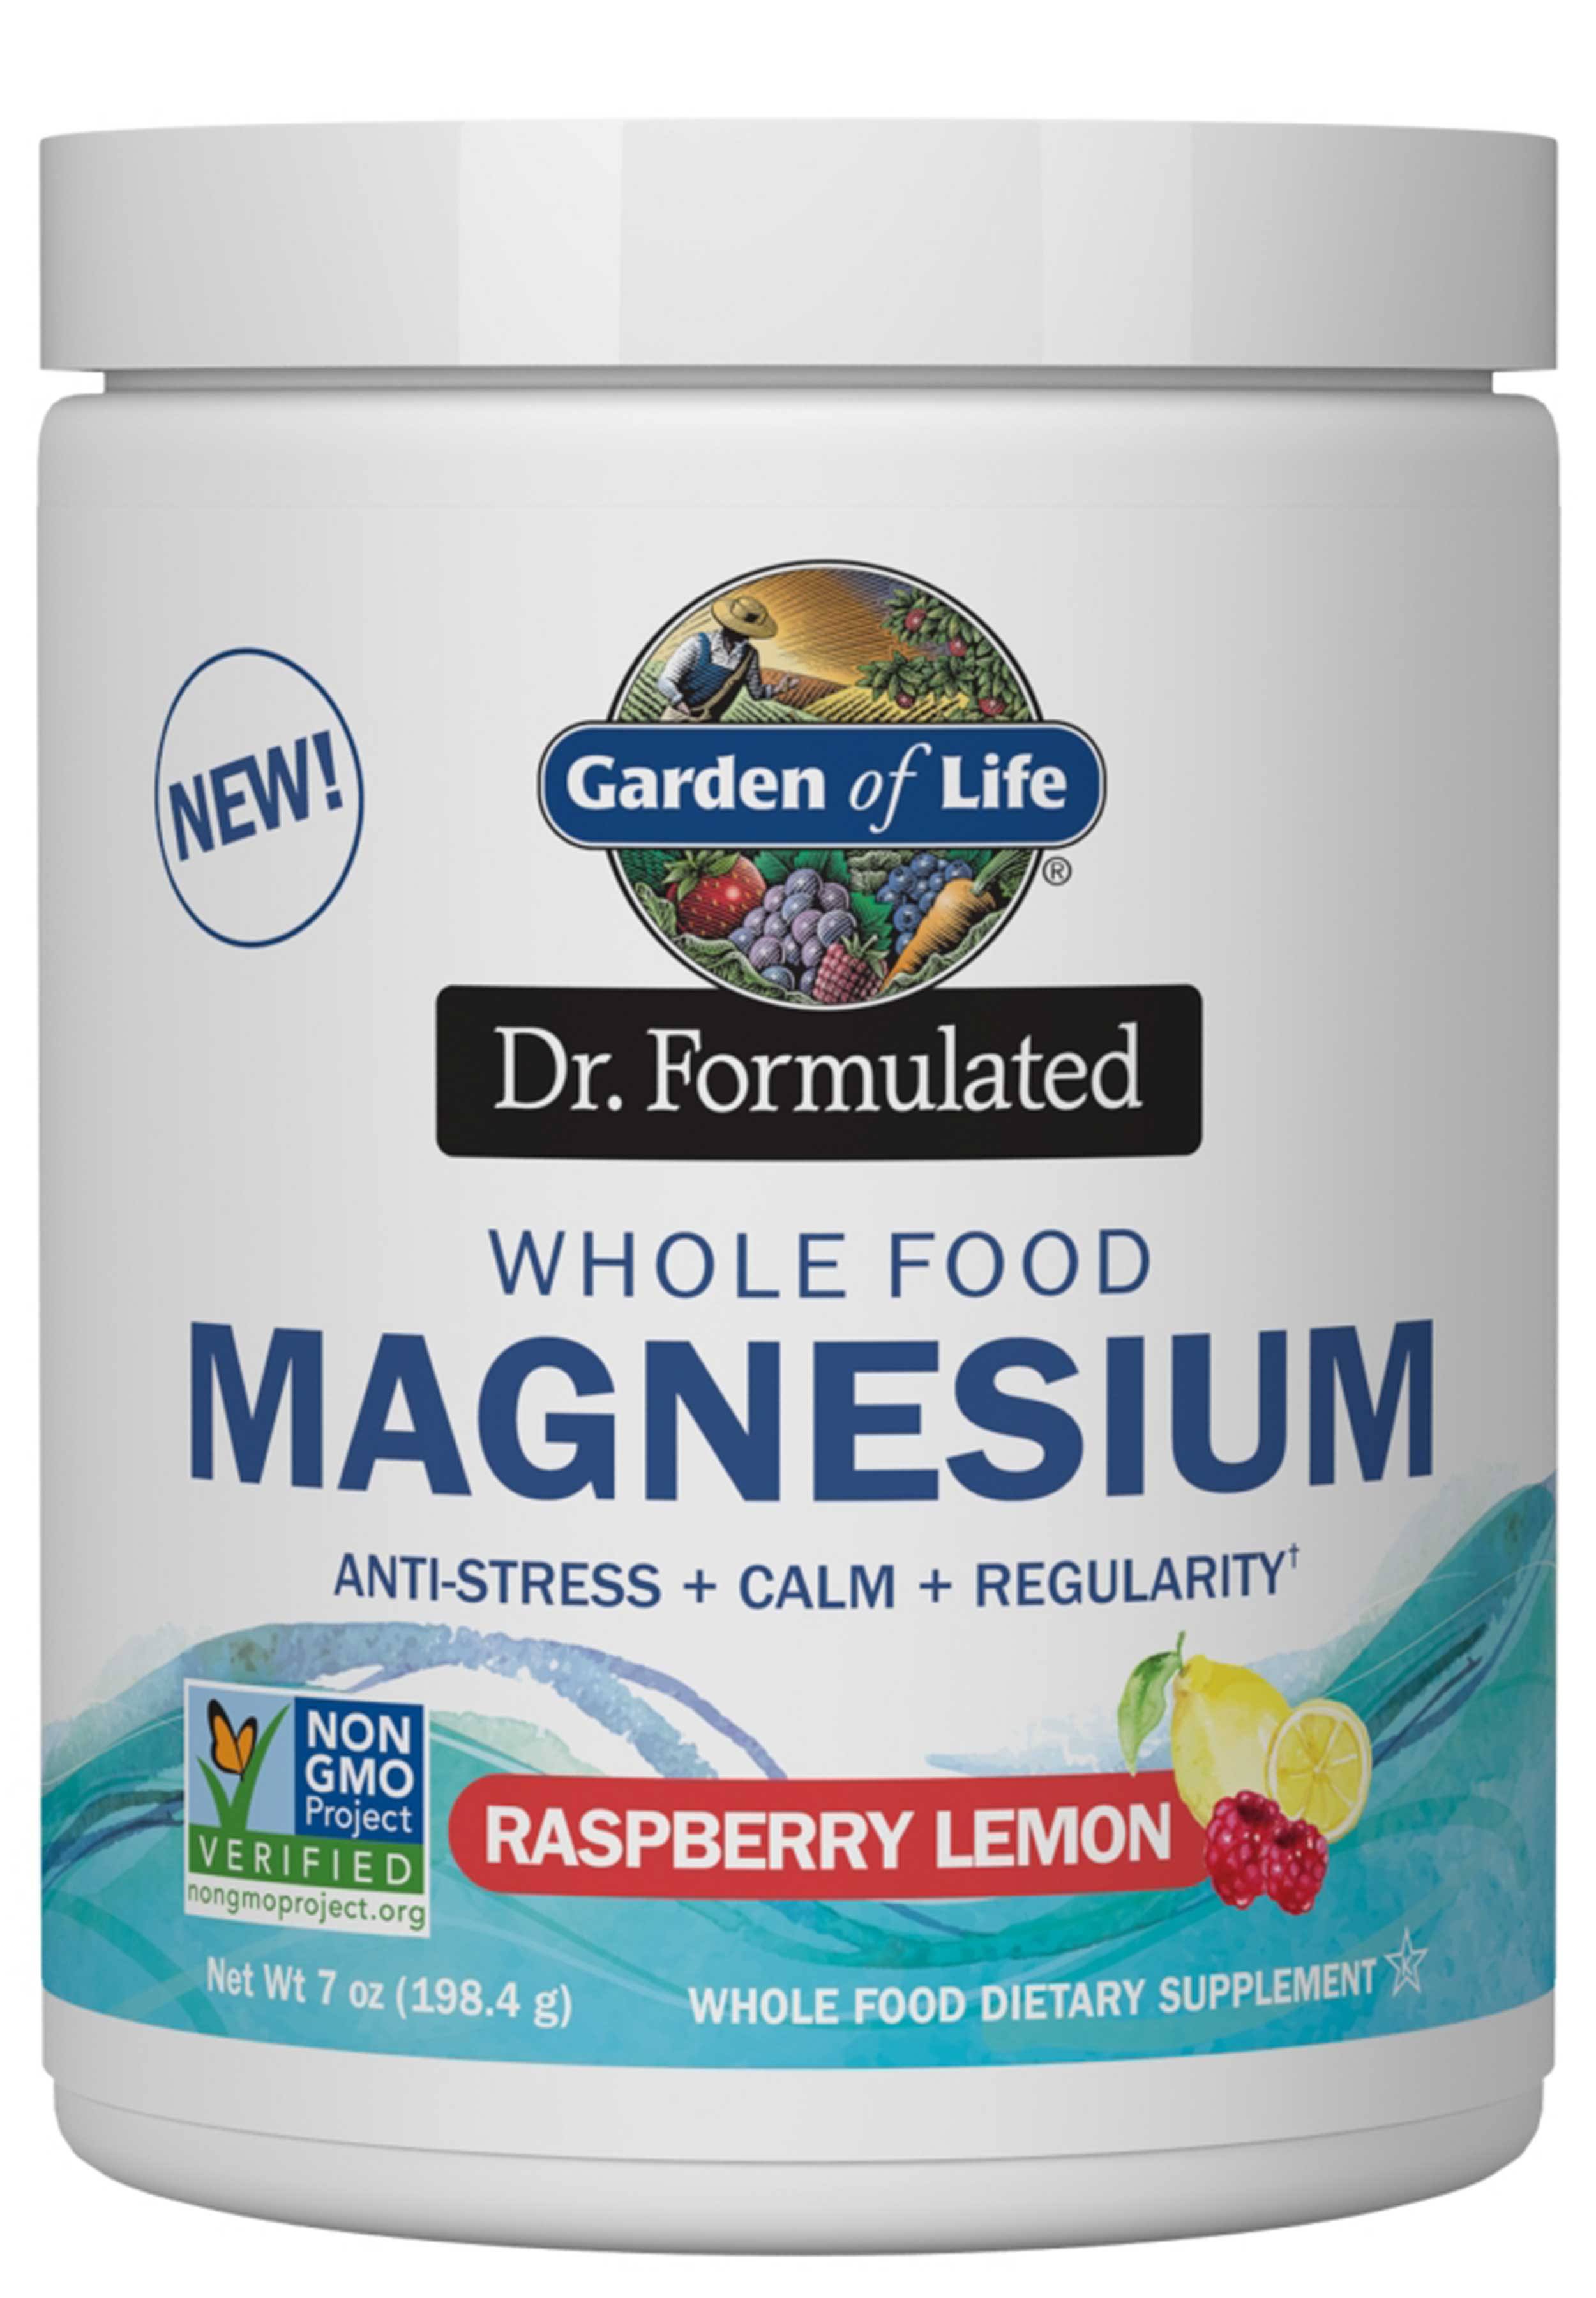 Garden of Life Dr. Formulated Whole Food Magnesium Raspberry Lemon